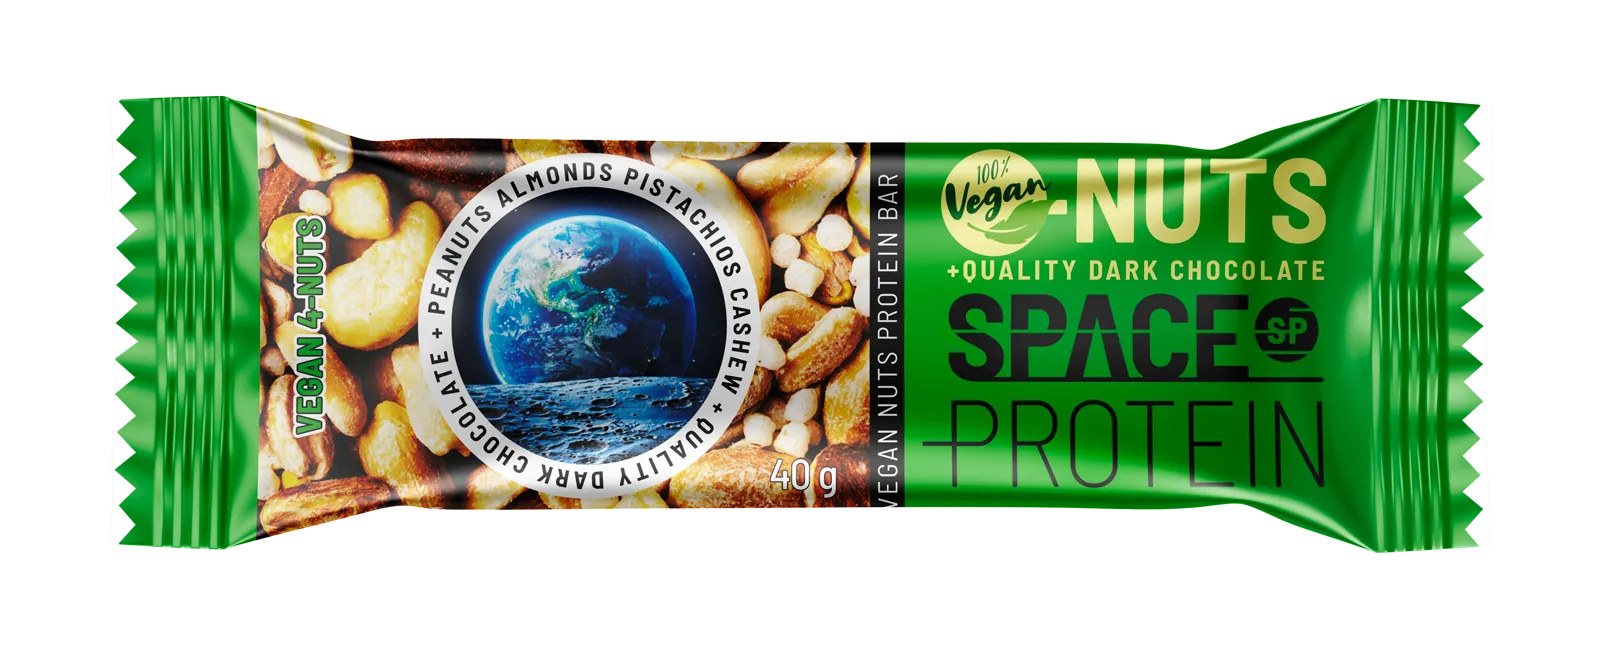 Space Protein TYCINKA VEGAN NUTS 4-NUTS